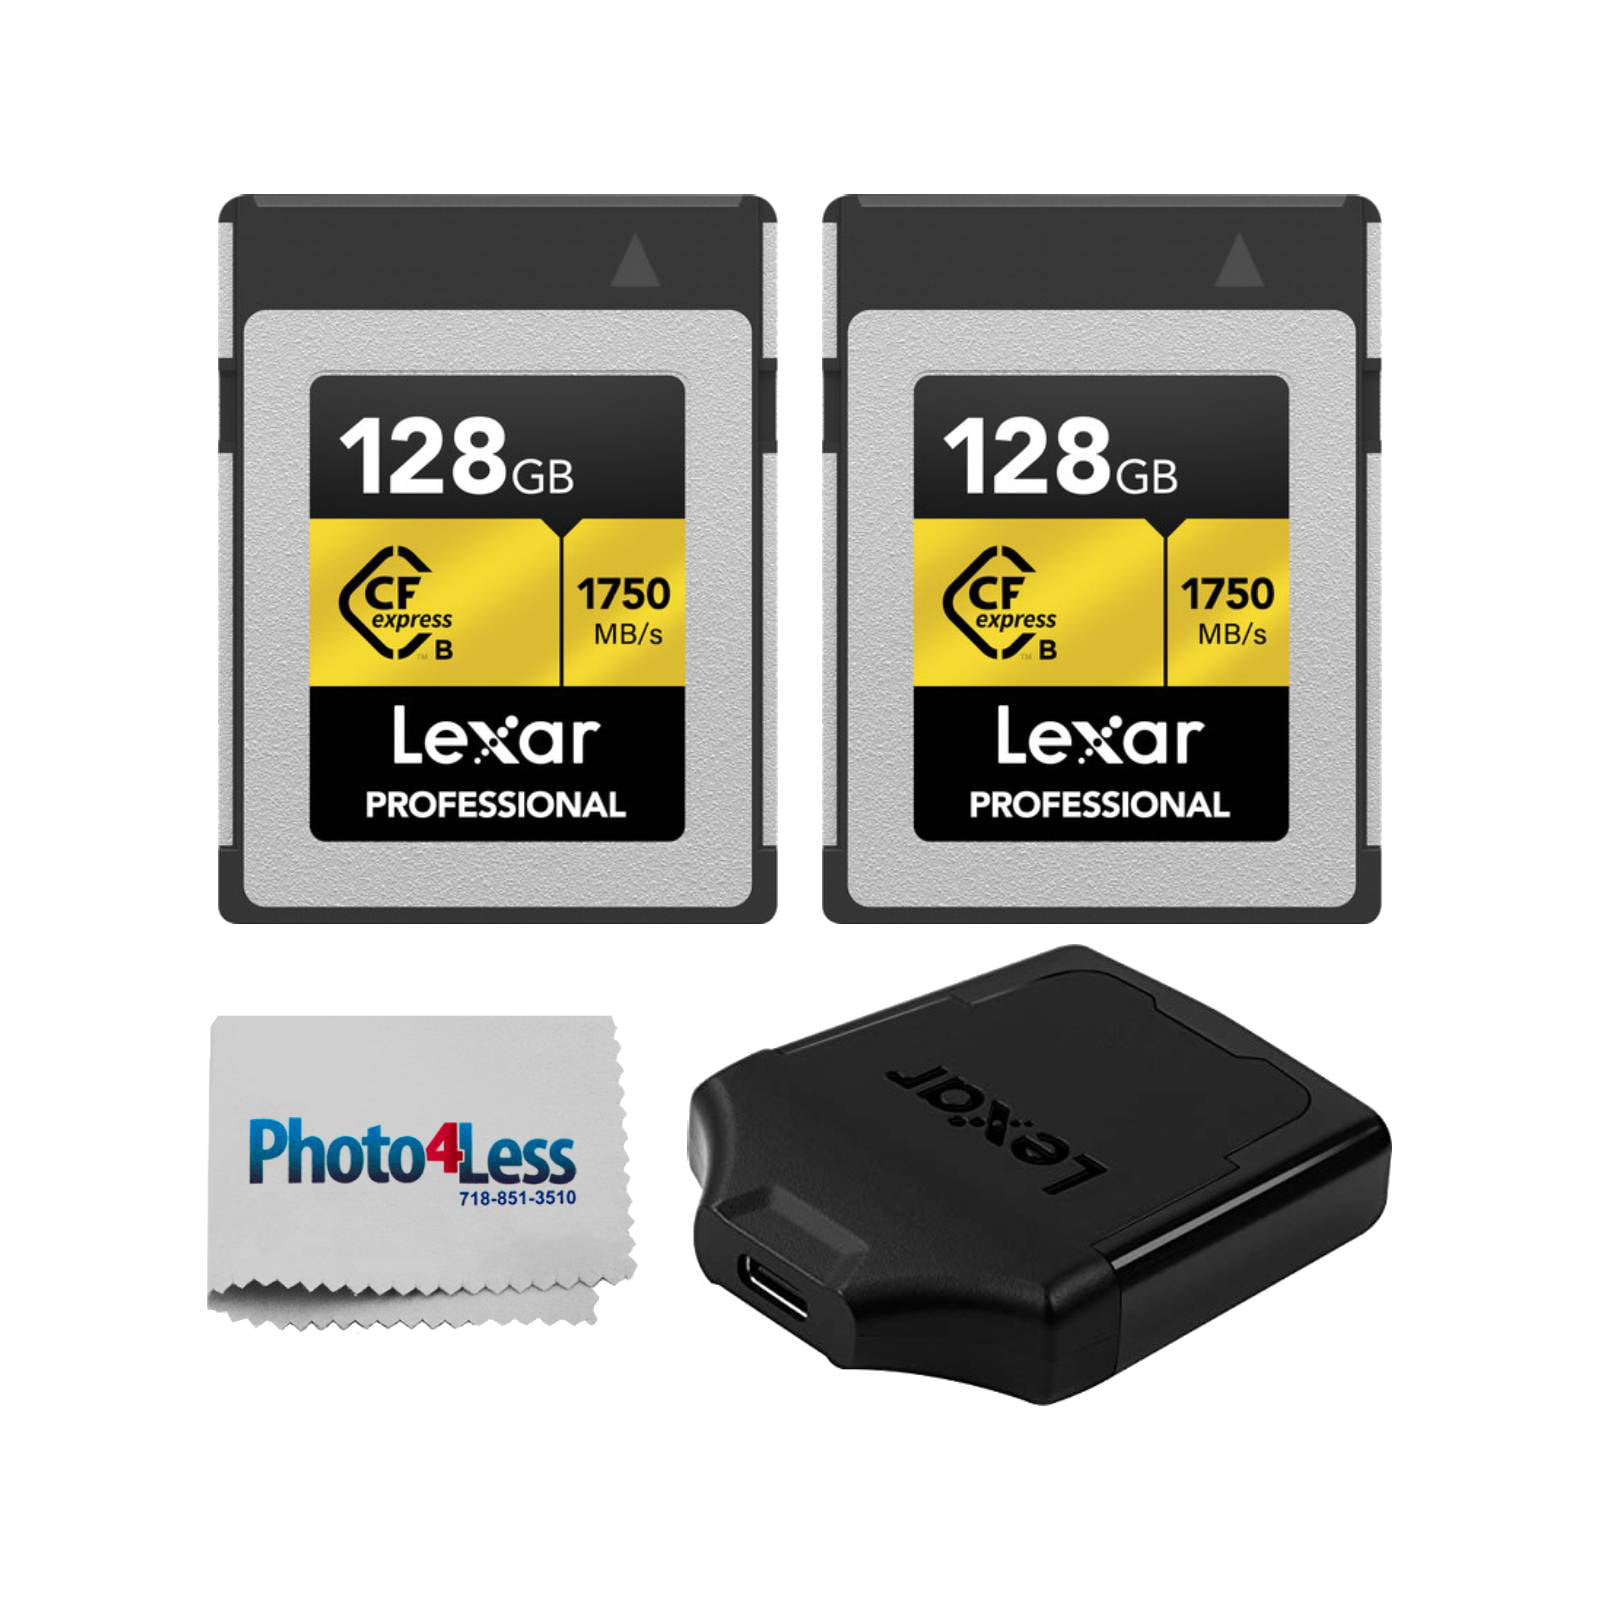 2 Lexar 128GB Professional CFexpress Type-B Memory Cards + More!